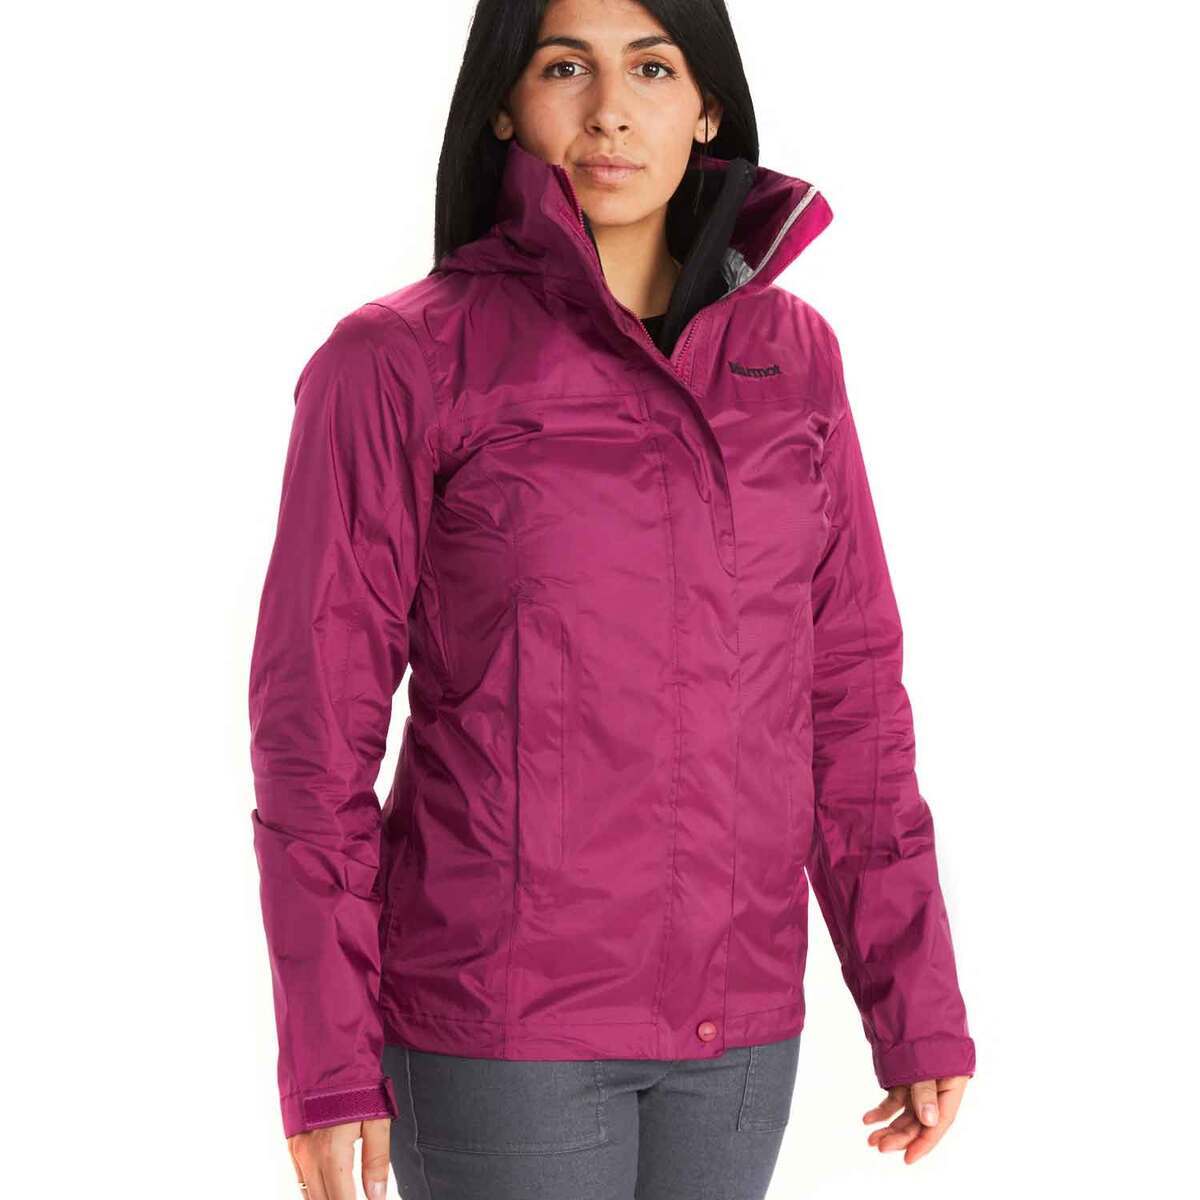 Marmot Women's PreCip Eco Waterproof Packable Rain Jacket - Wild Rose - L - Wild Rose L 